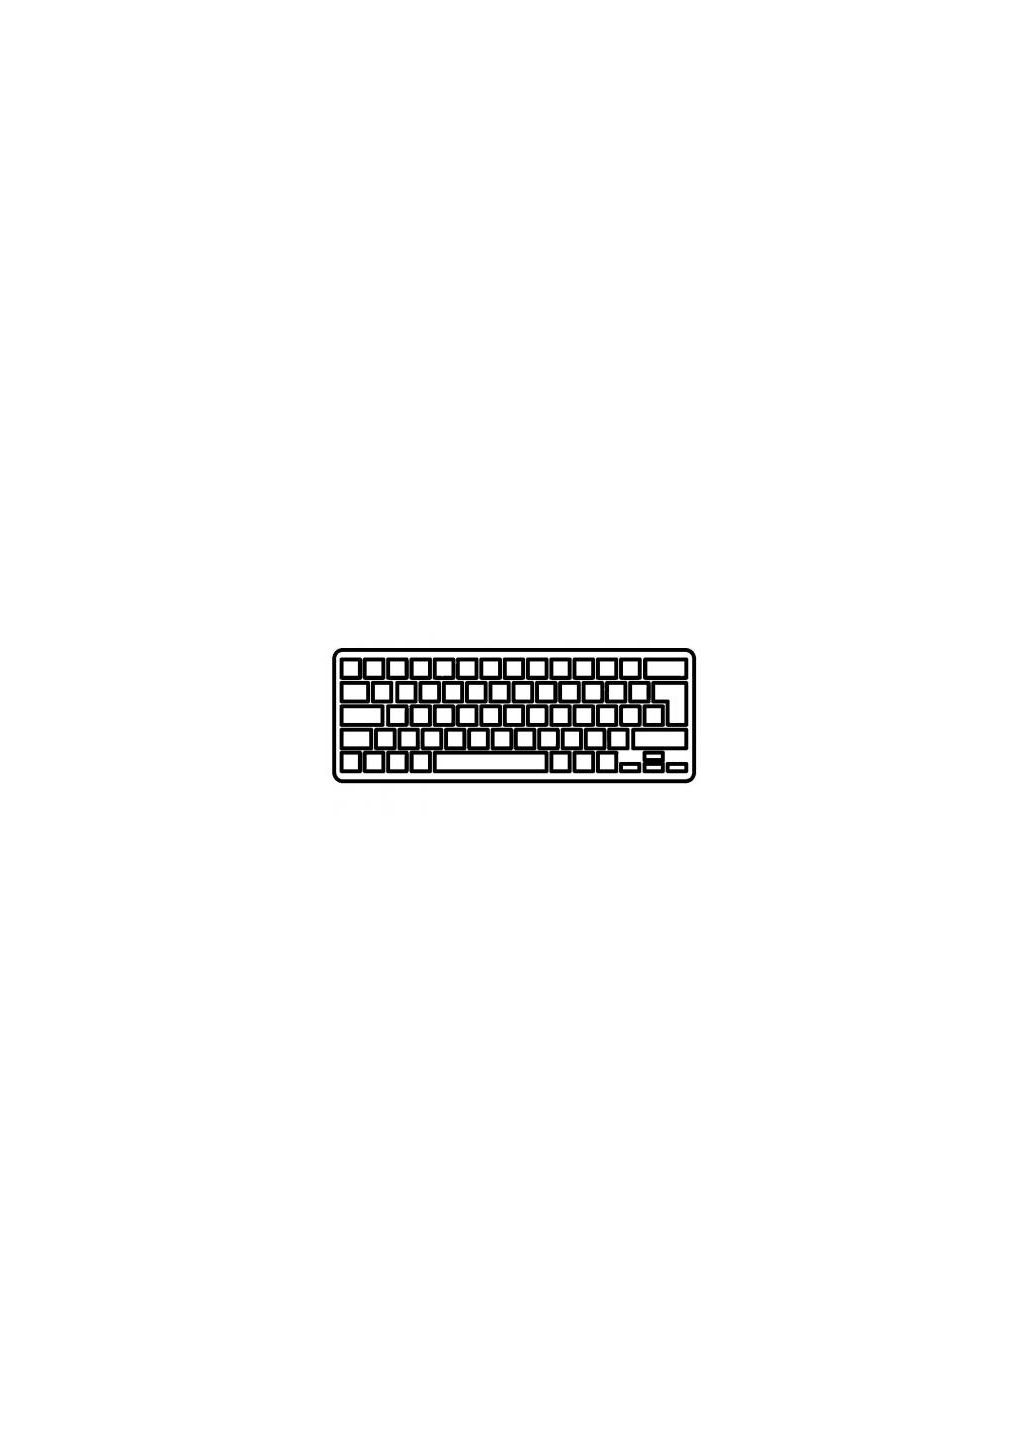 Клавиатура ноутбука Pavilion 15AC/ProBook 250/255 G4 черная без рамки UA (A43918) HP pavilion 15-ac/probook 250/255 g4 черная без рамки (276707609)